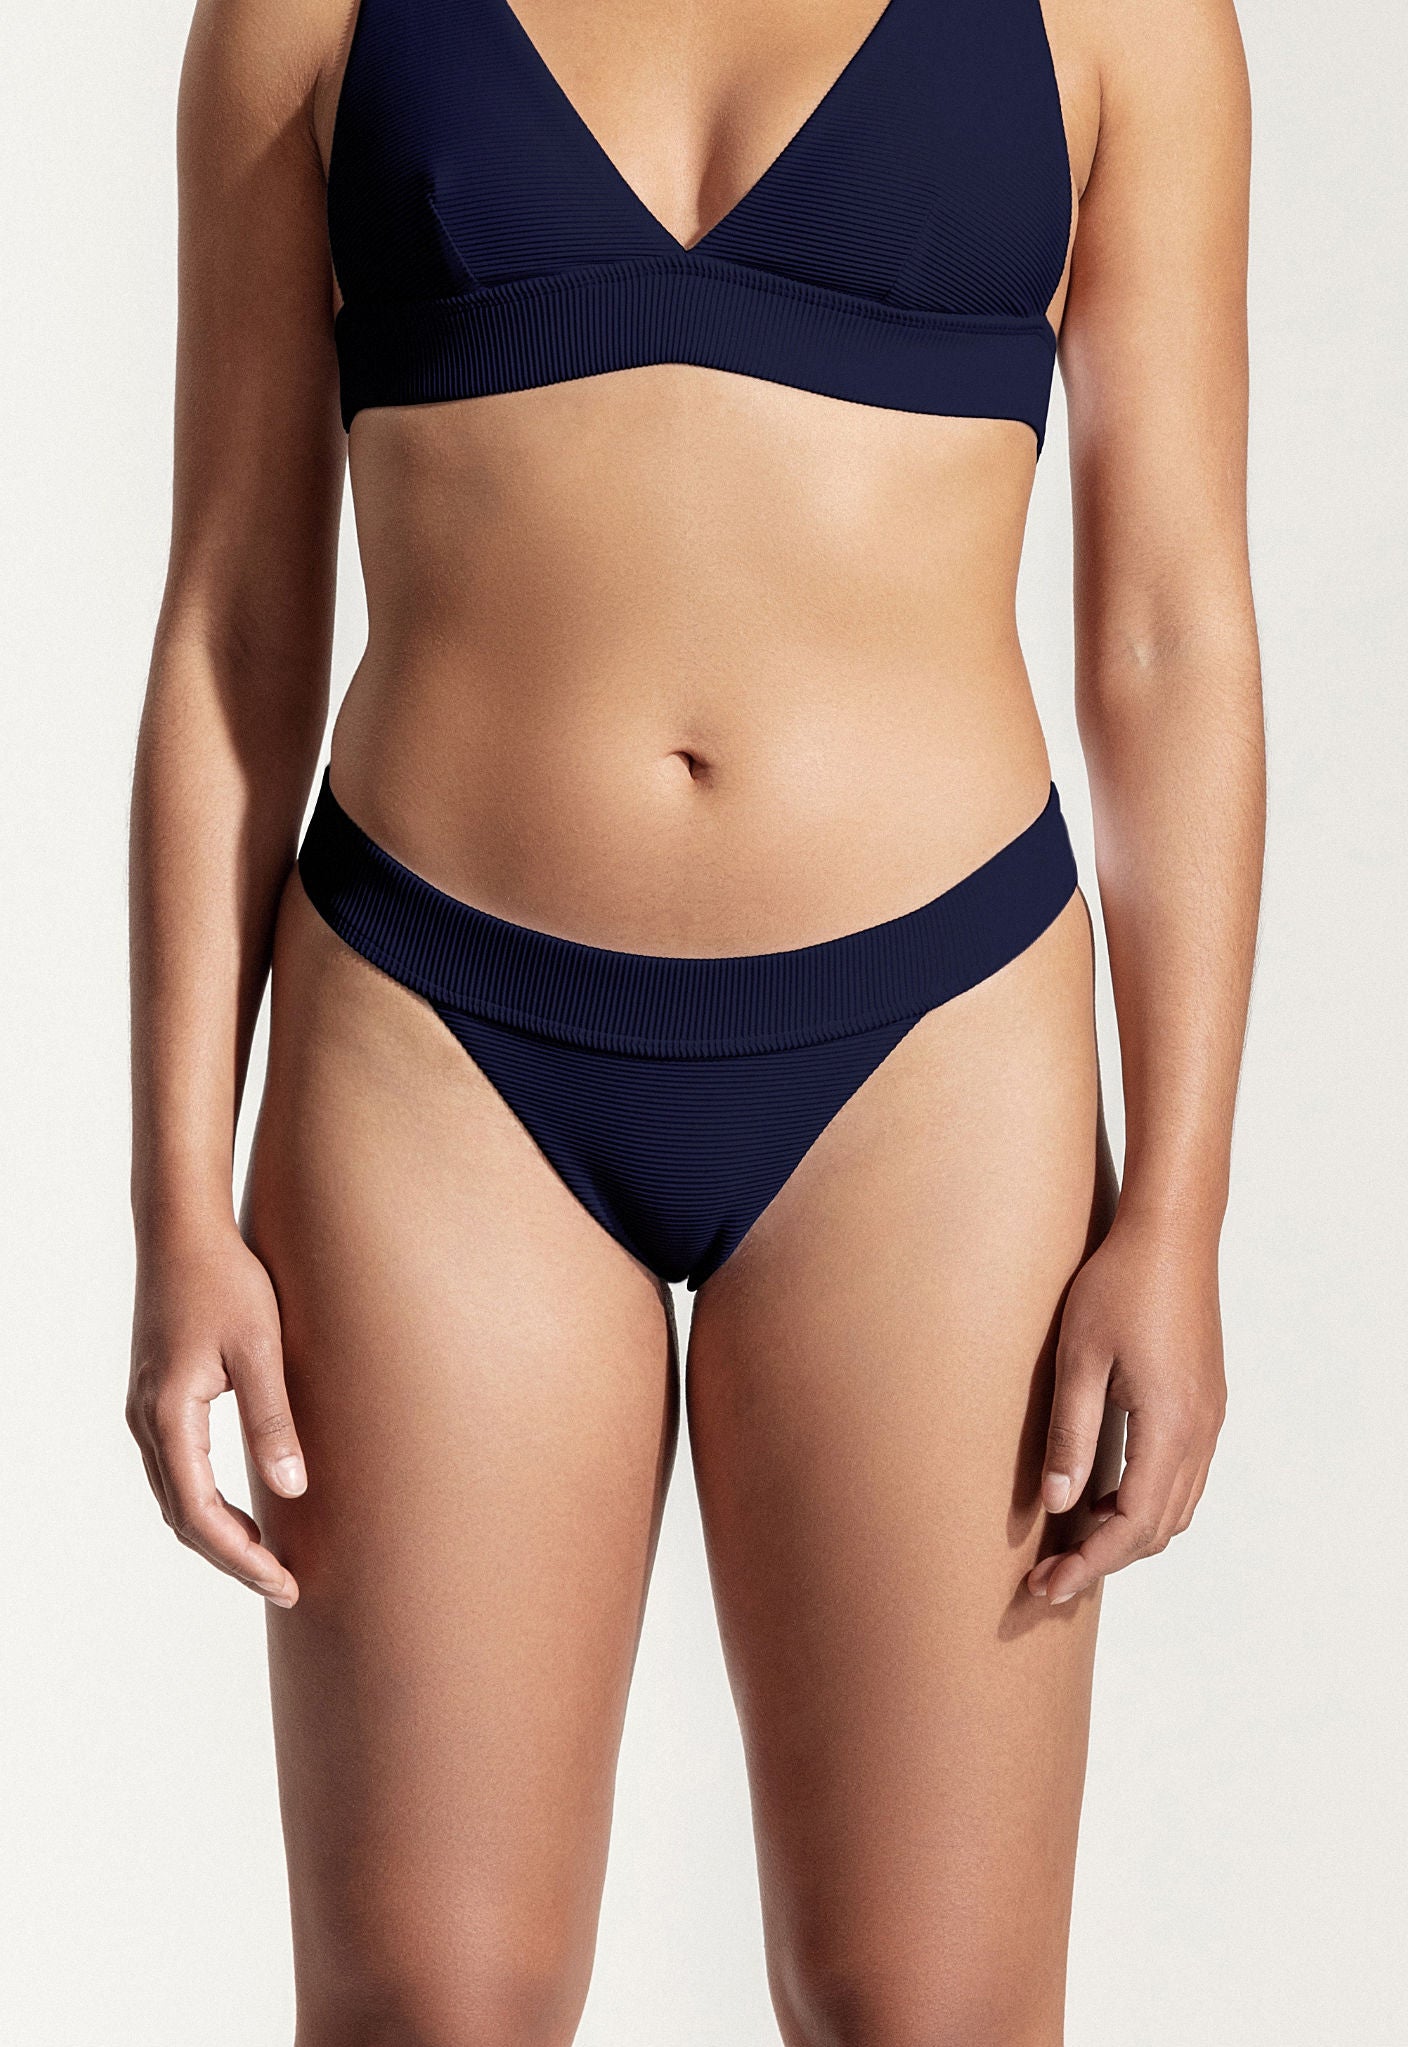 Oy-bikini-bottom-Aesthetics-22-Oroshi-dunkelblau-2.jpg